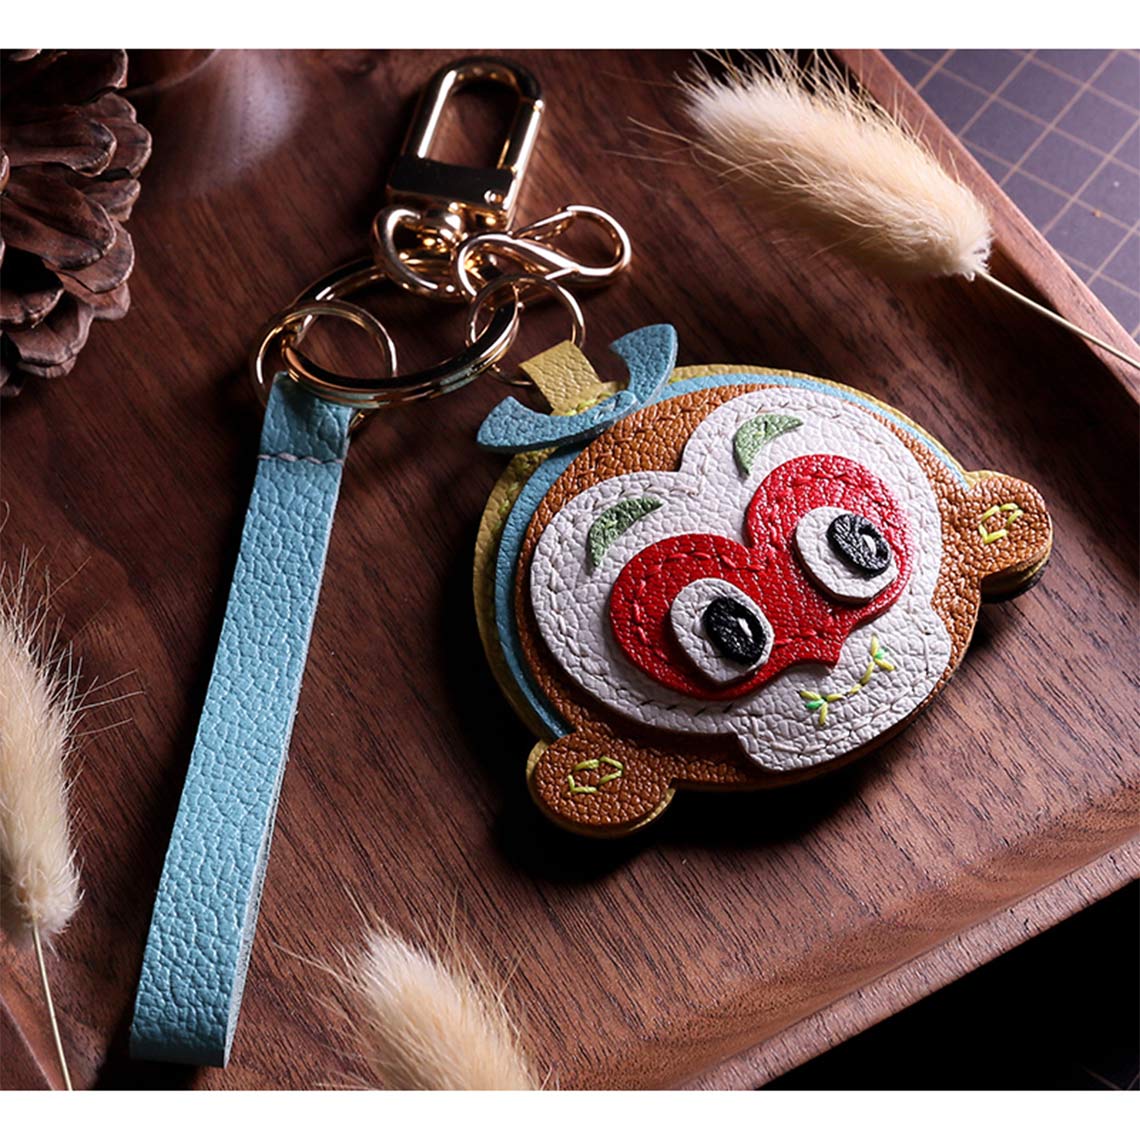 Best Monkey Gift Idea - Sun Wukong the Monkey King Keychain Bag Charm